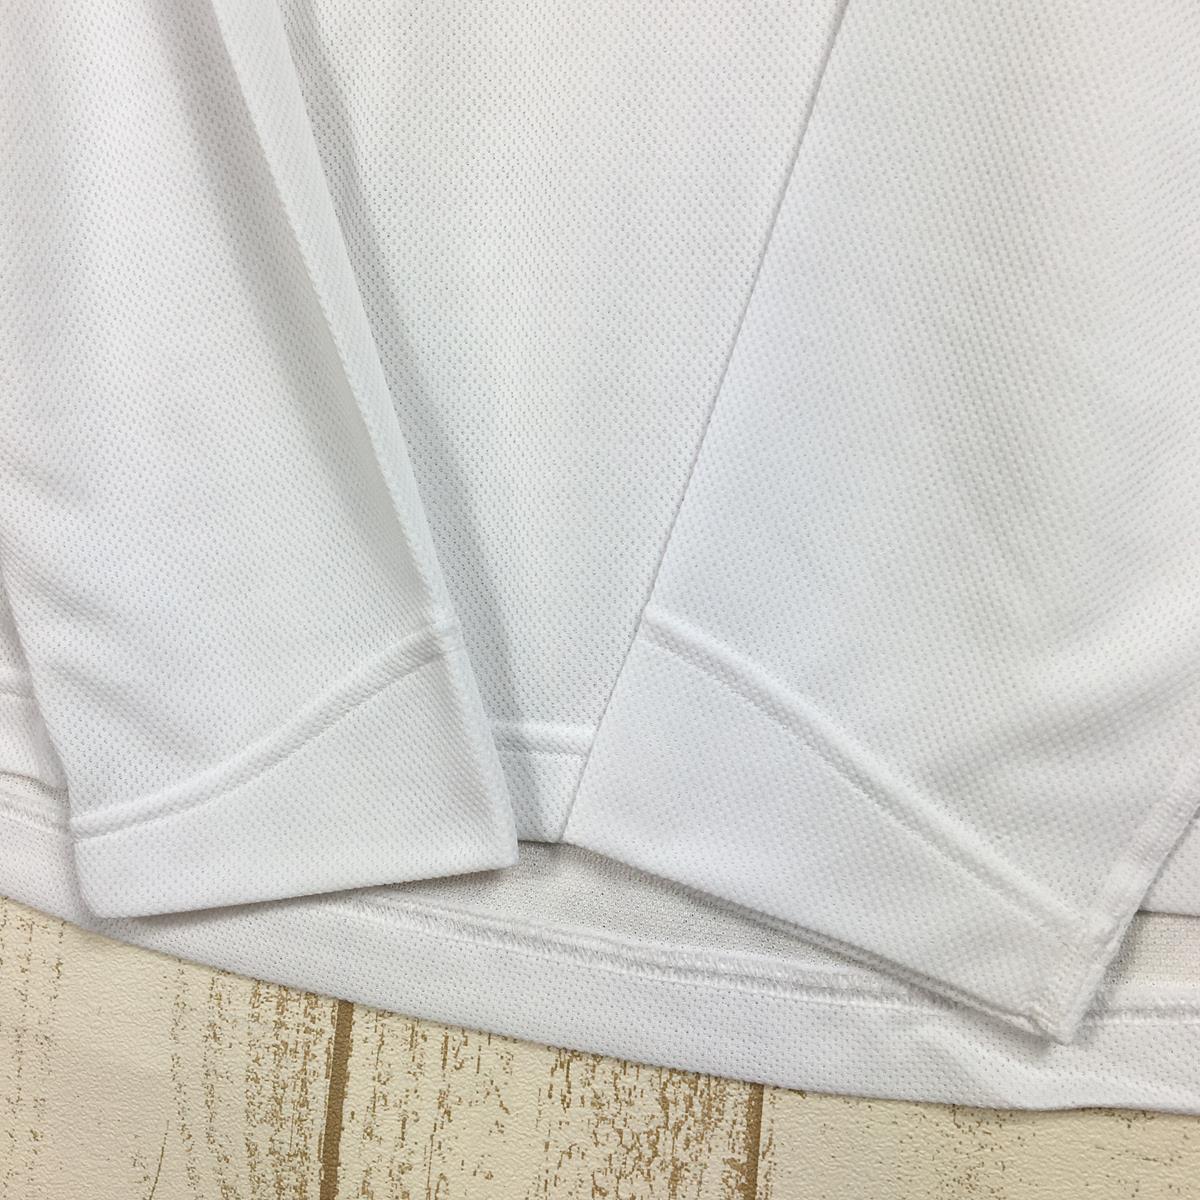 【MEN's L】 モンベル クールラグラン ロングスリーブジップシャツ MONTBELL 1104693 WT White ホワイト系